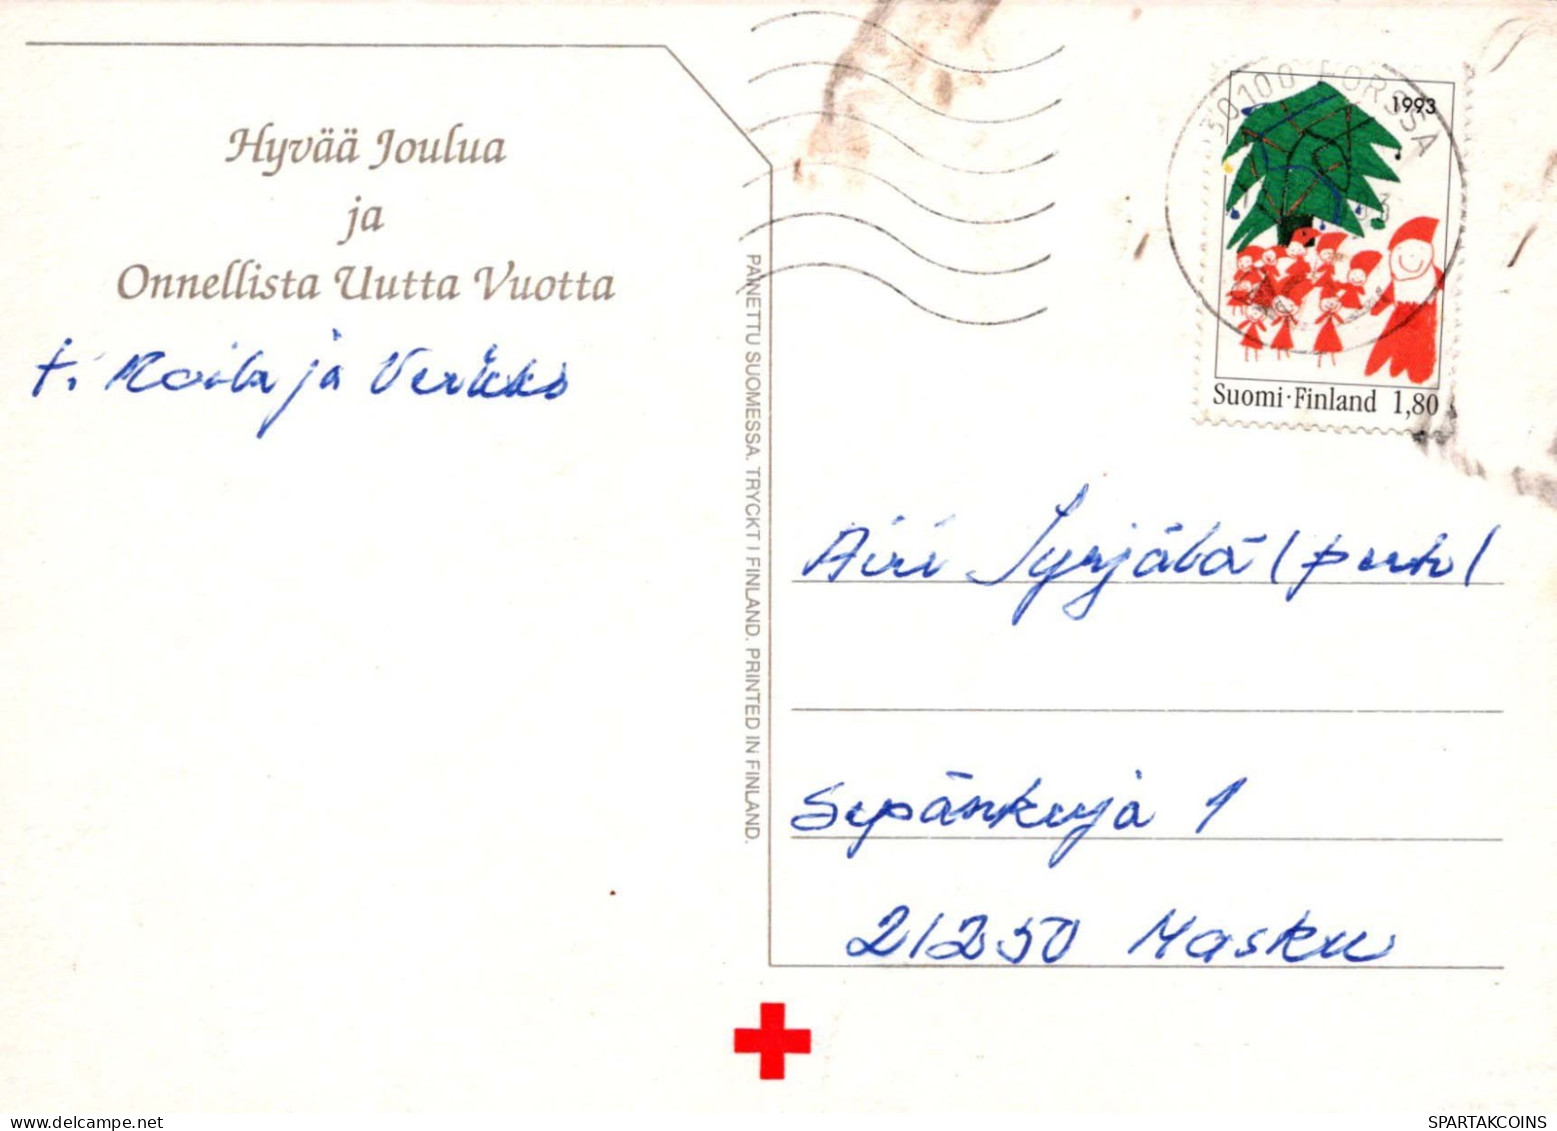 SANTA CLAUS Happy New Year Christmas Vintage Postcard CPSM #PBB023.GB - Santa Claus